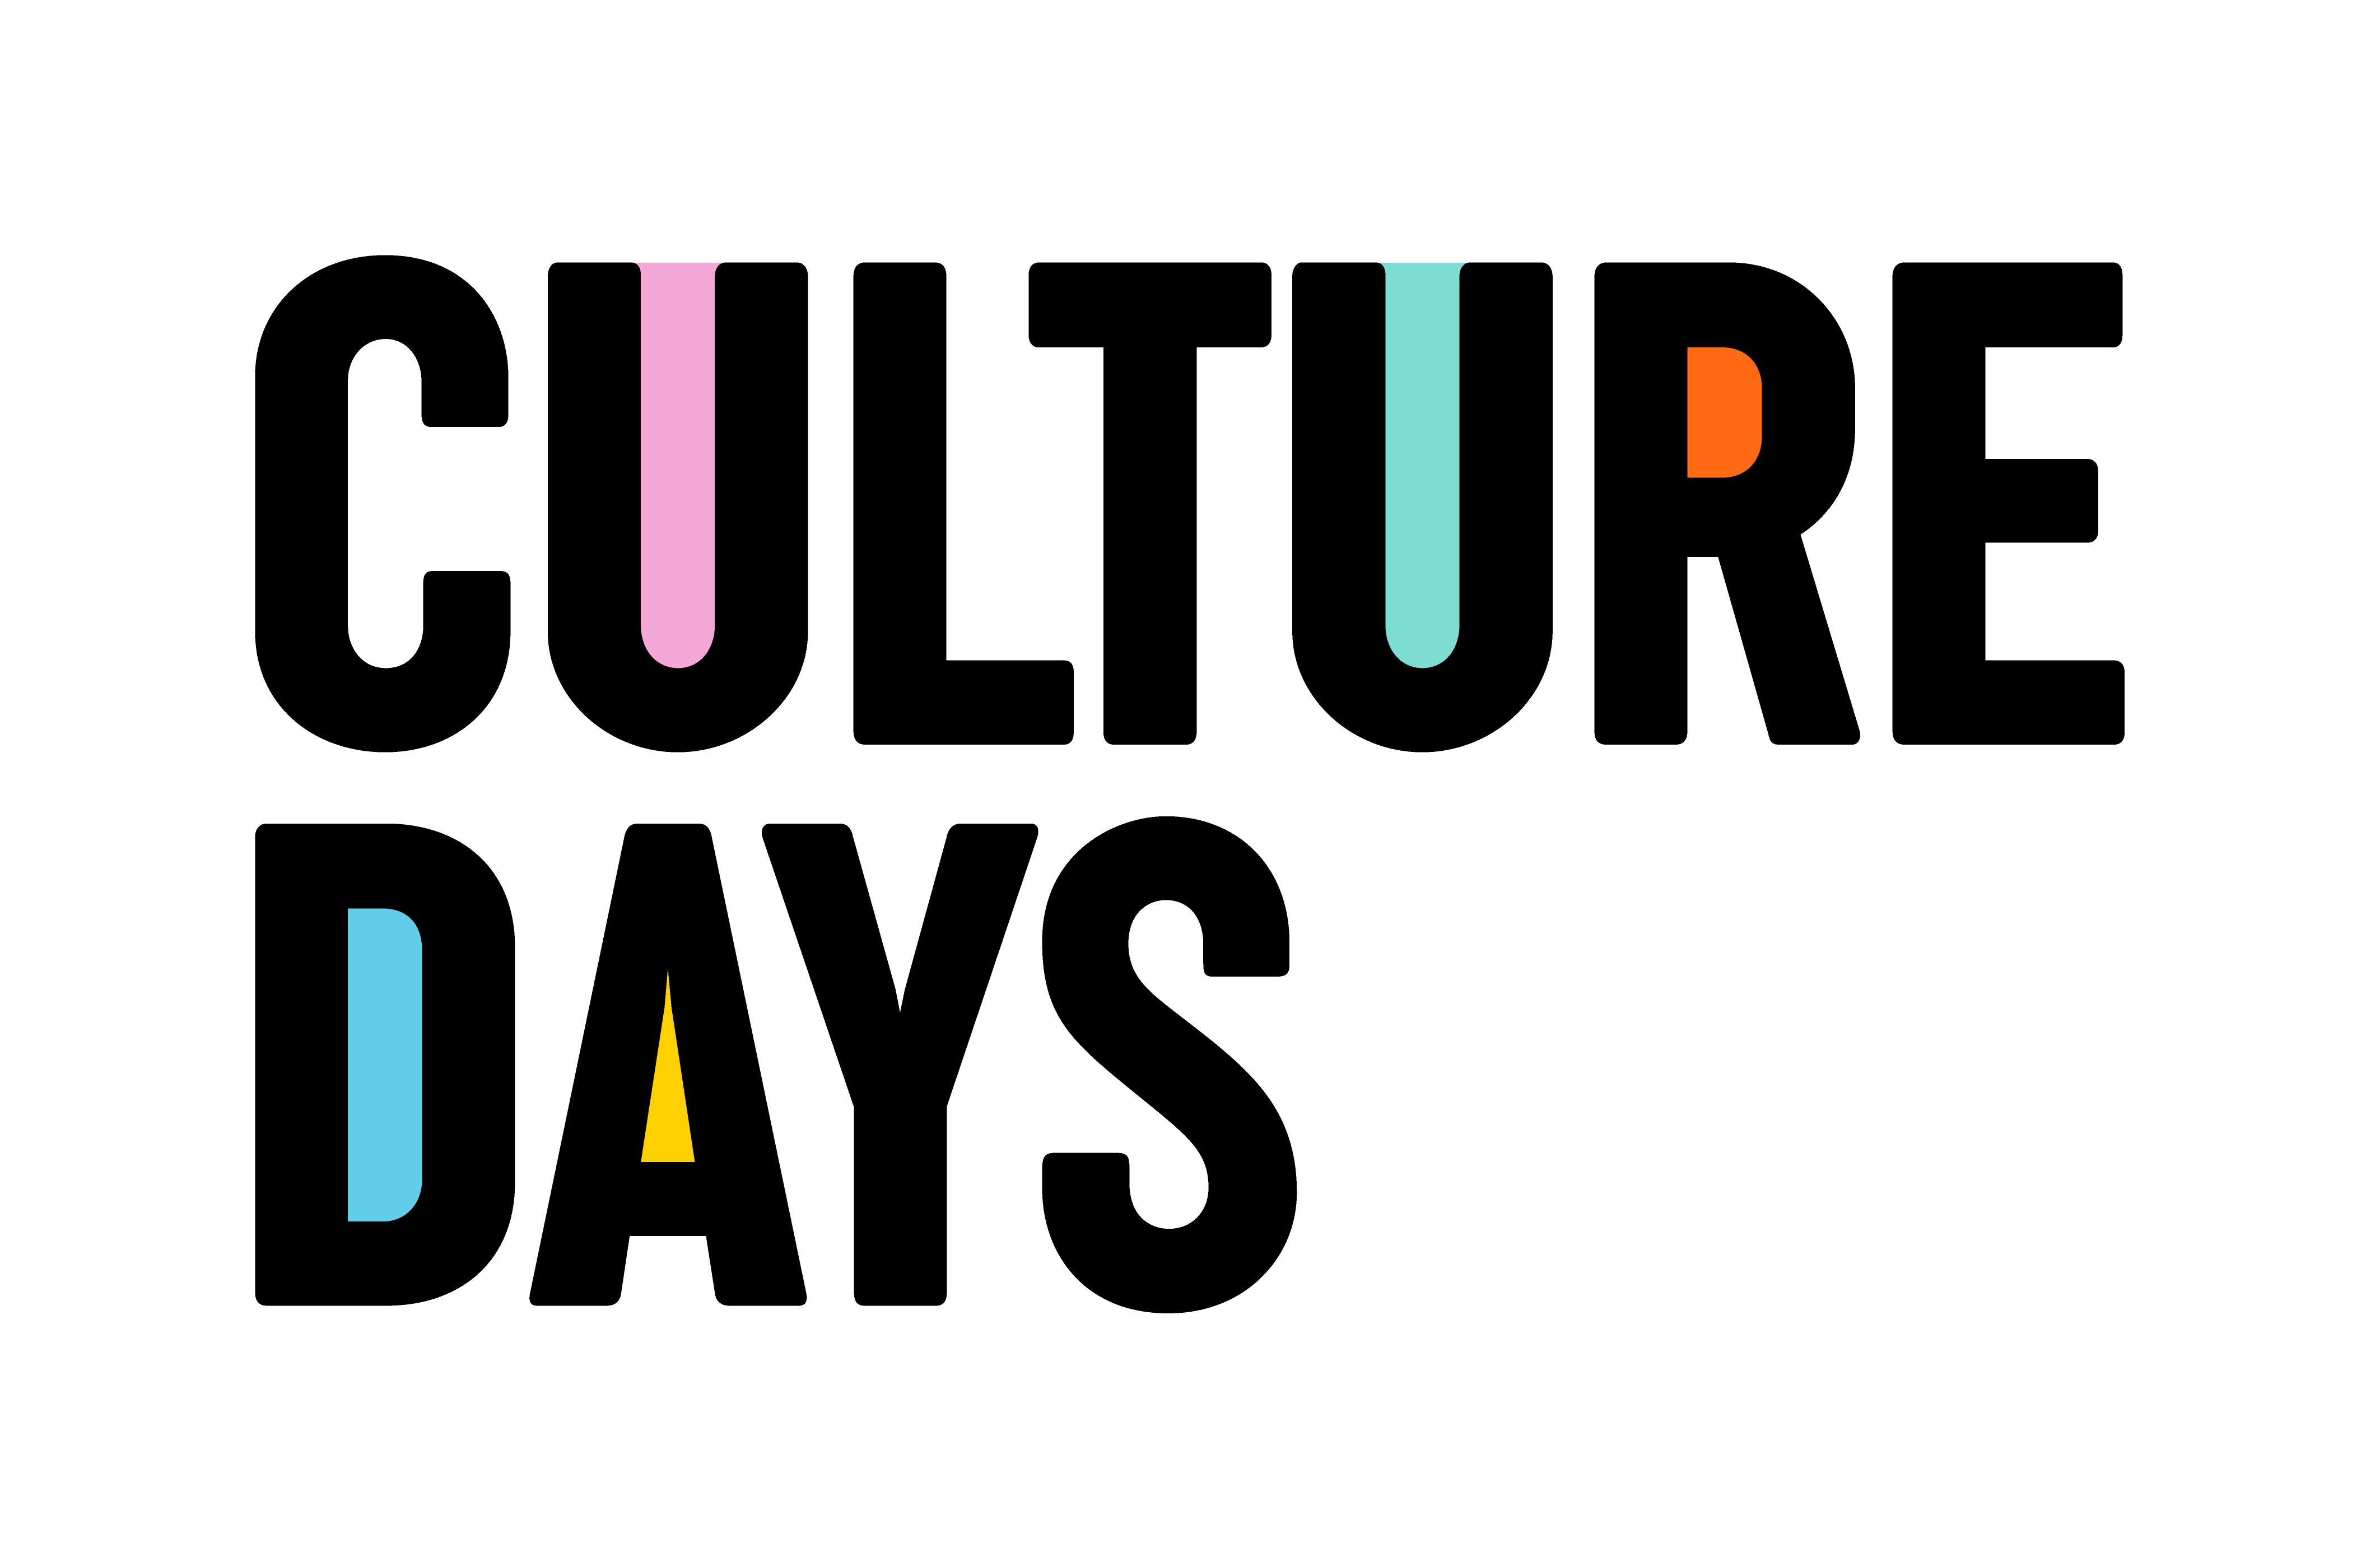 Culture Days logo